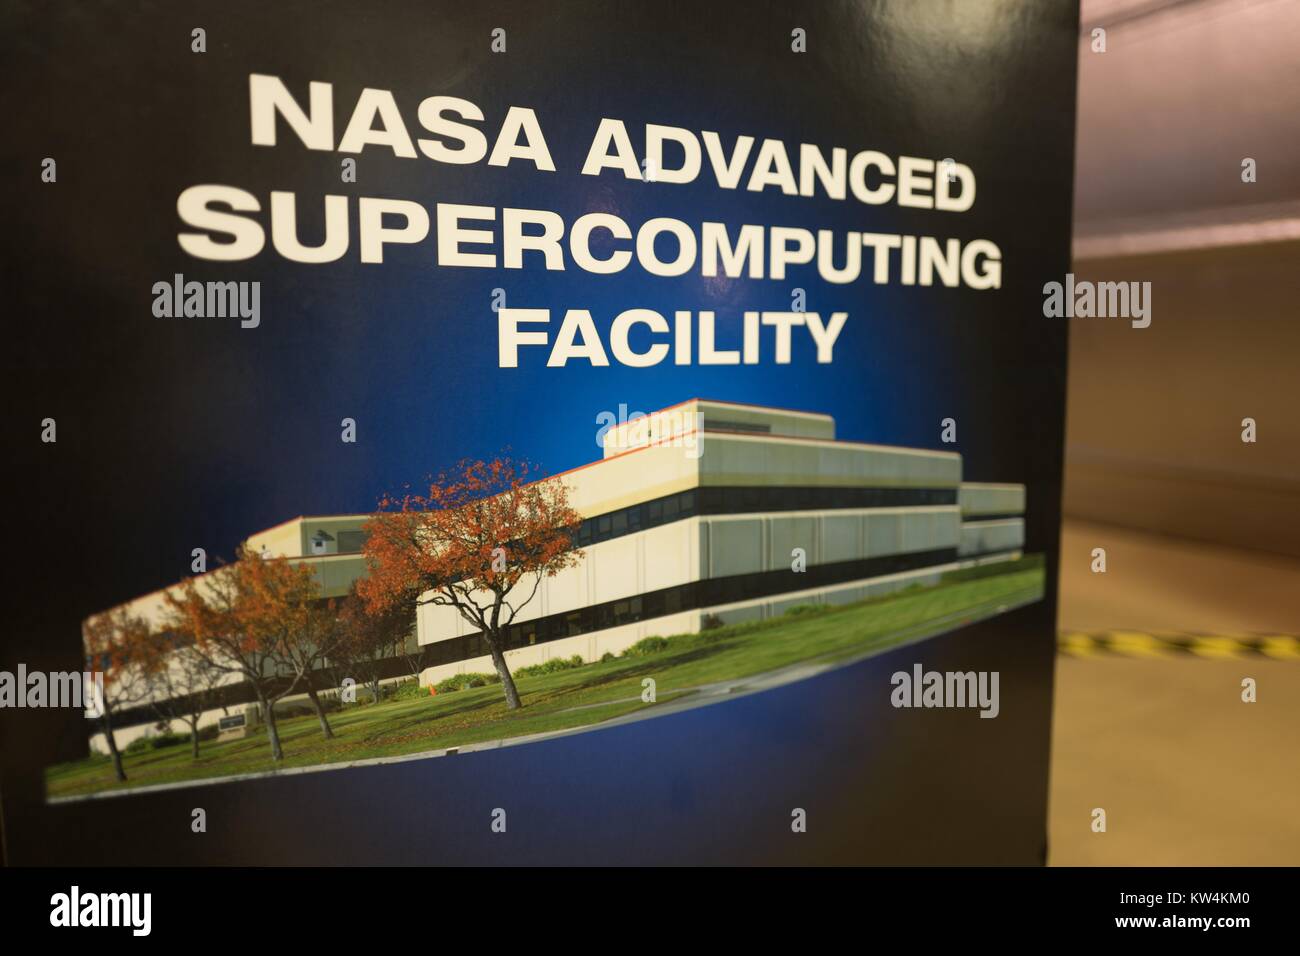 Display for NASA Advanced Supercomputing Facility, at NASA Ames Exploration Center, a visitor center at the NASA Ames Research Center campus in the Silicon Valley town of Palo Alto, California, August 25, 2016. Stock Photo